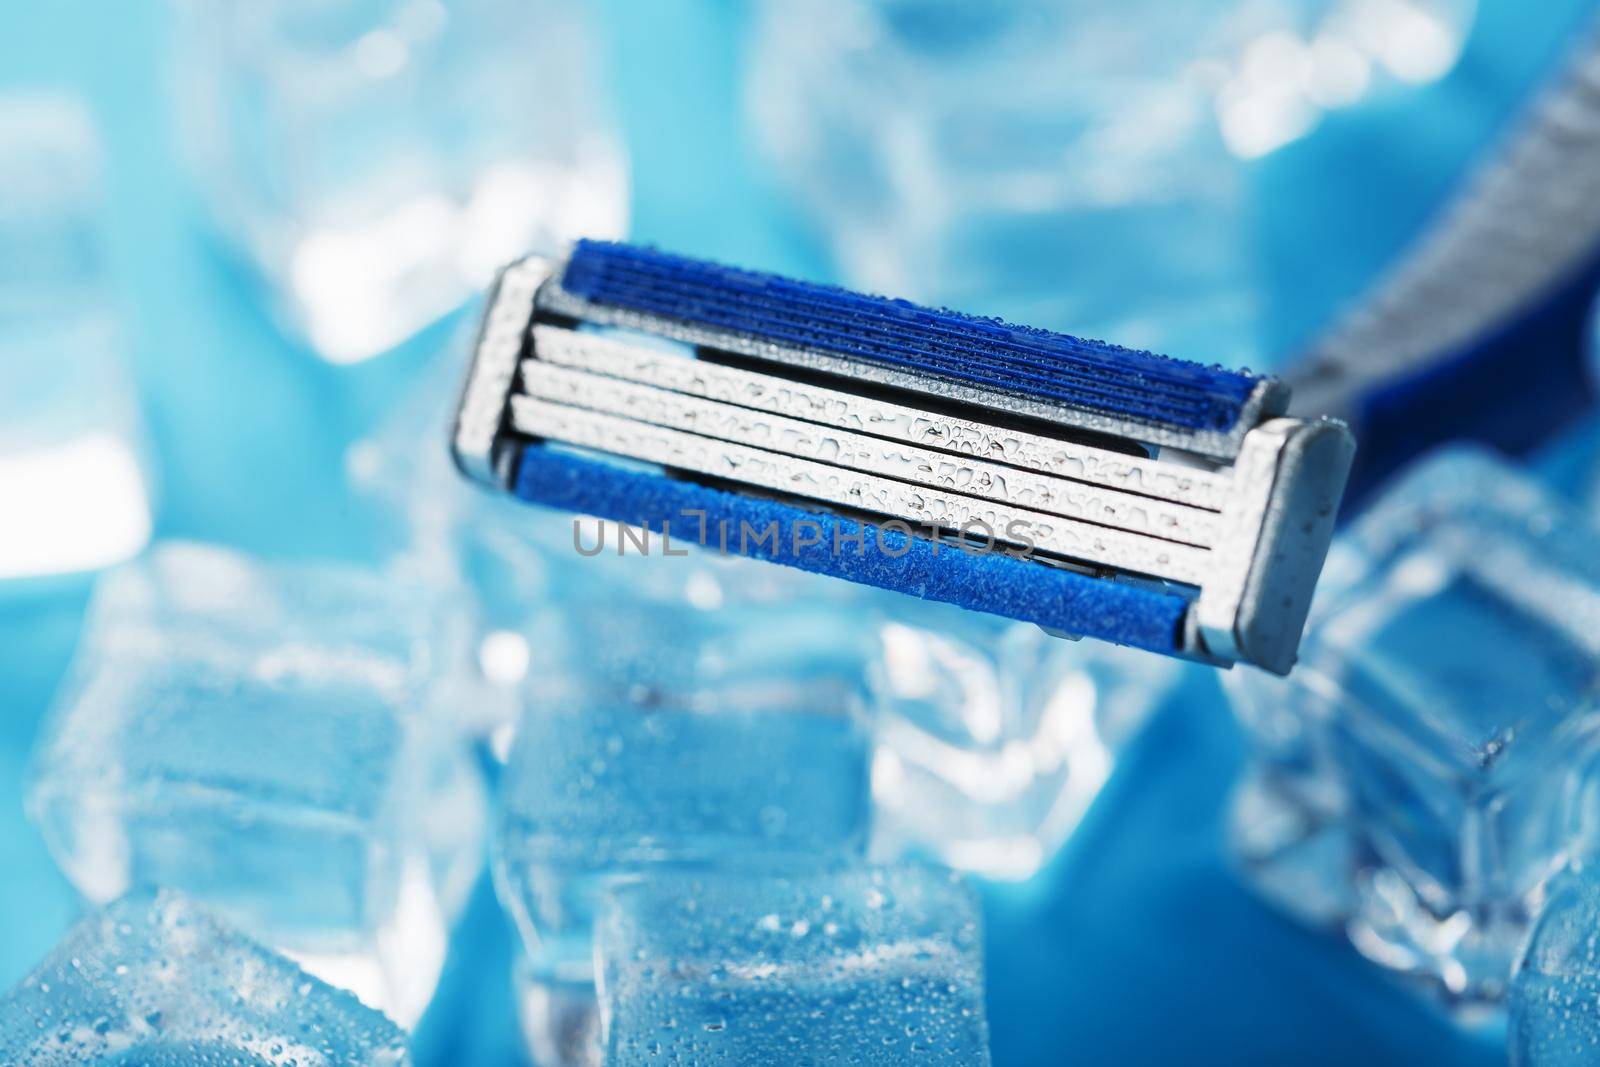 Refreshing shaving machine on the background of frosty ice cubes without irritation by AlexGrec